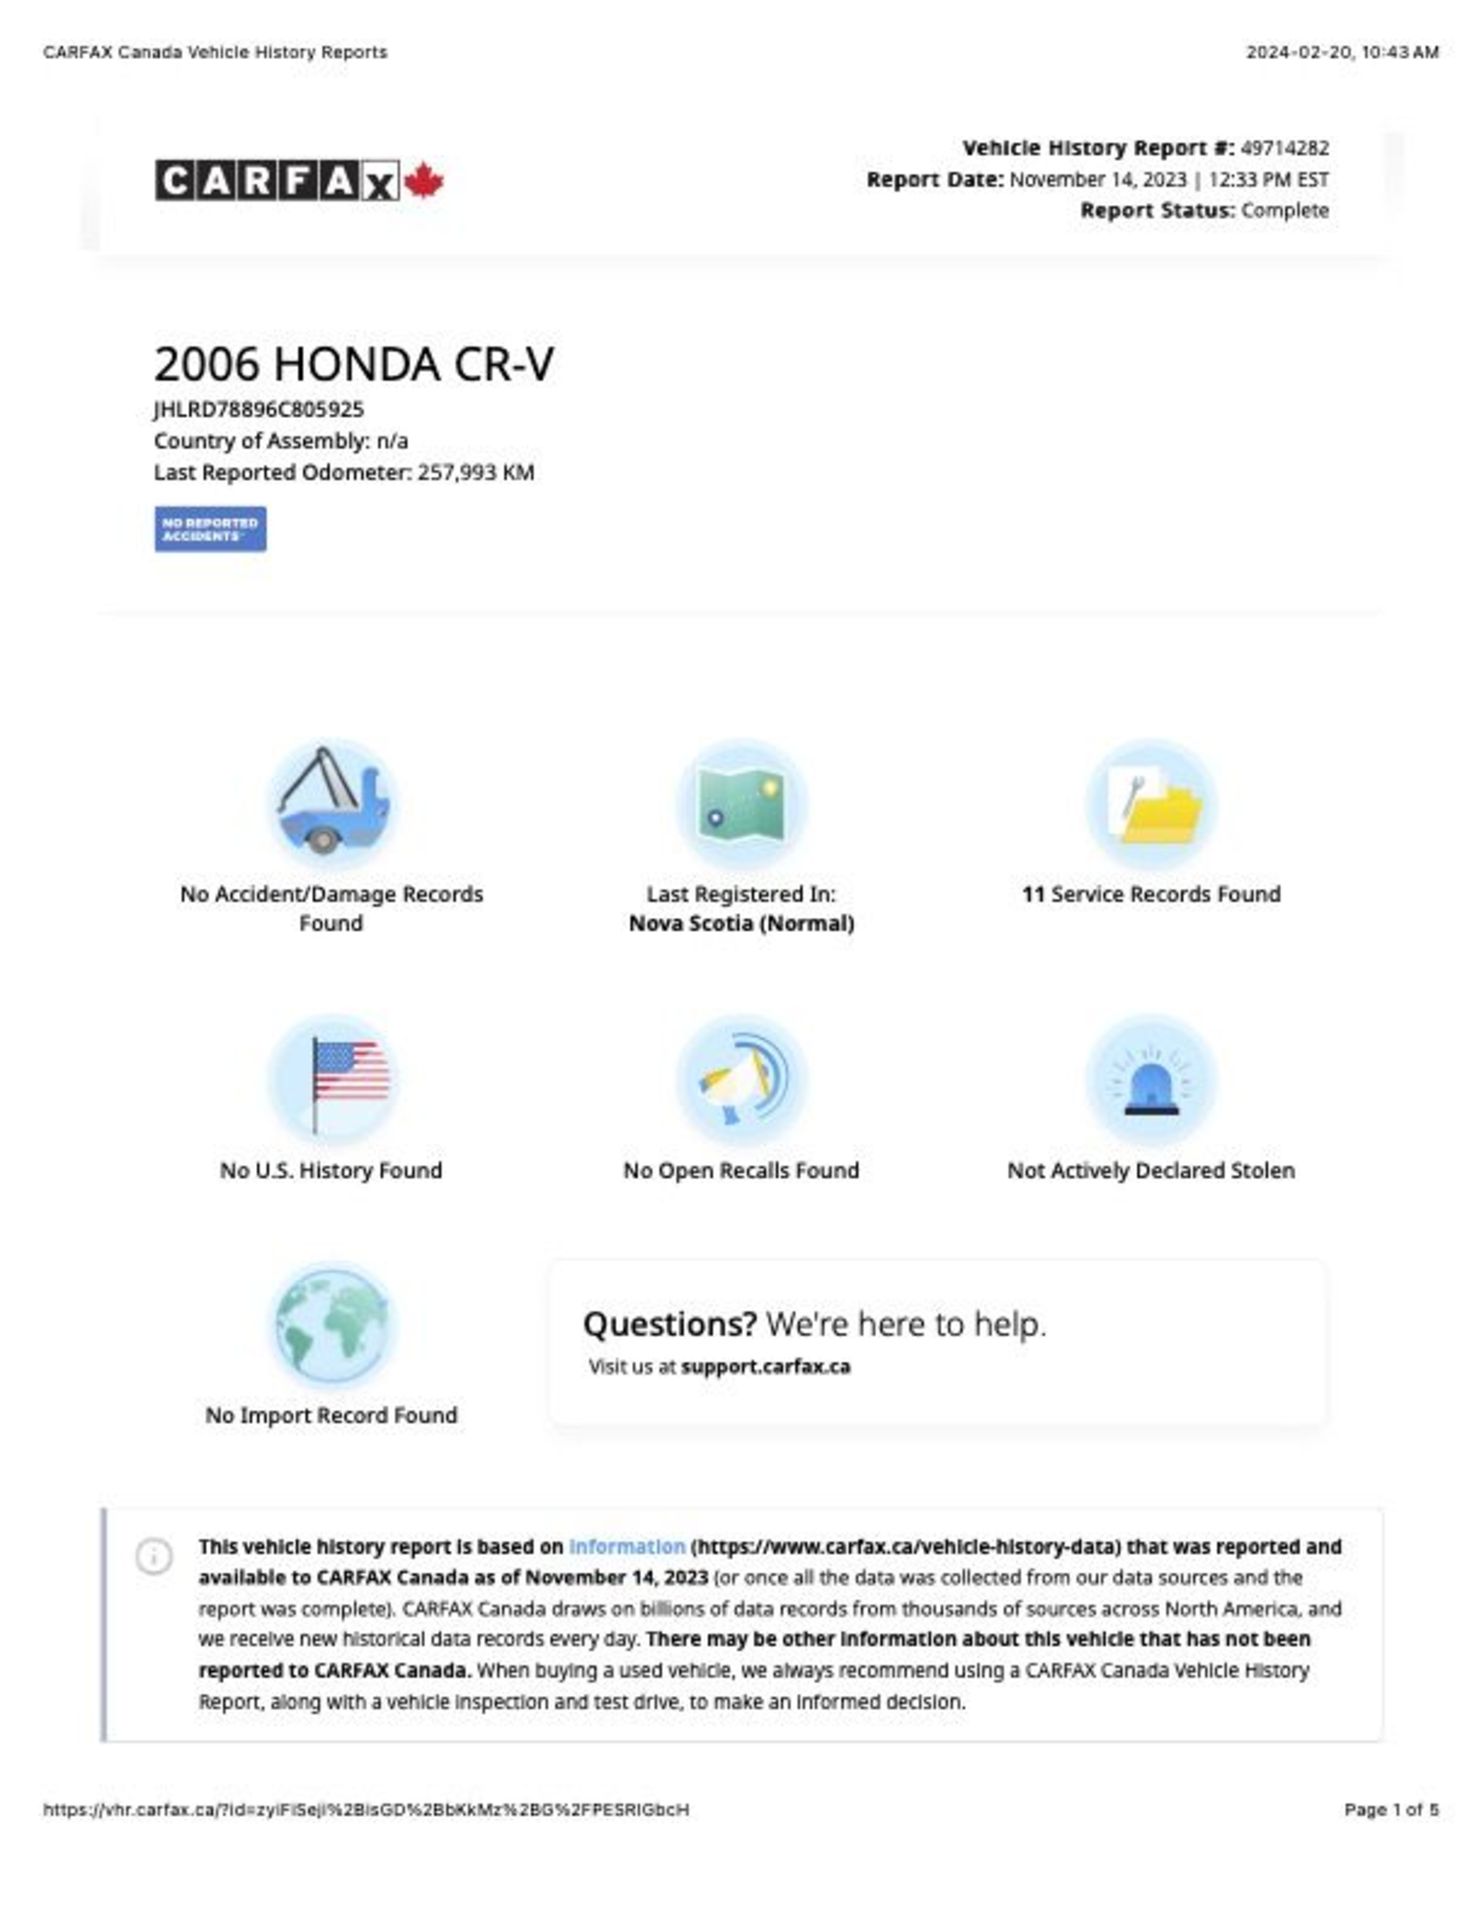 2006 Honda CR-V EX - Image 13 of 13